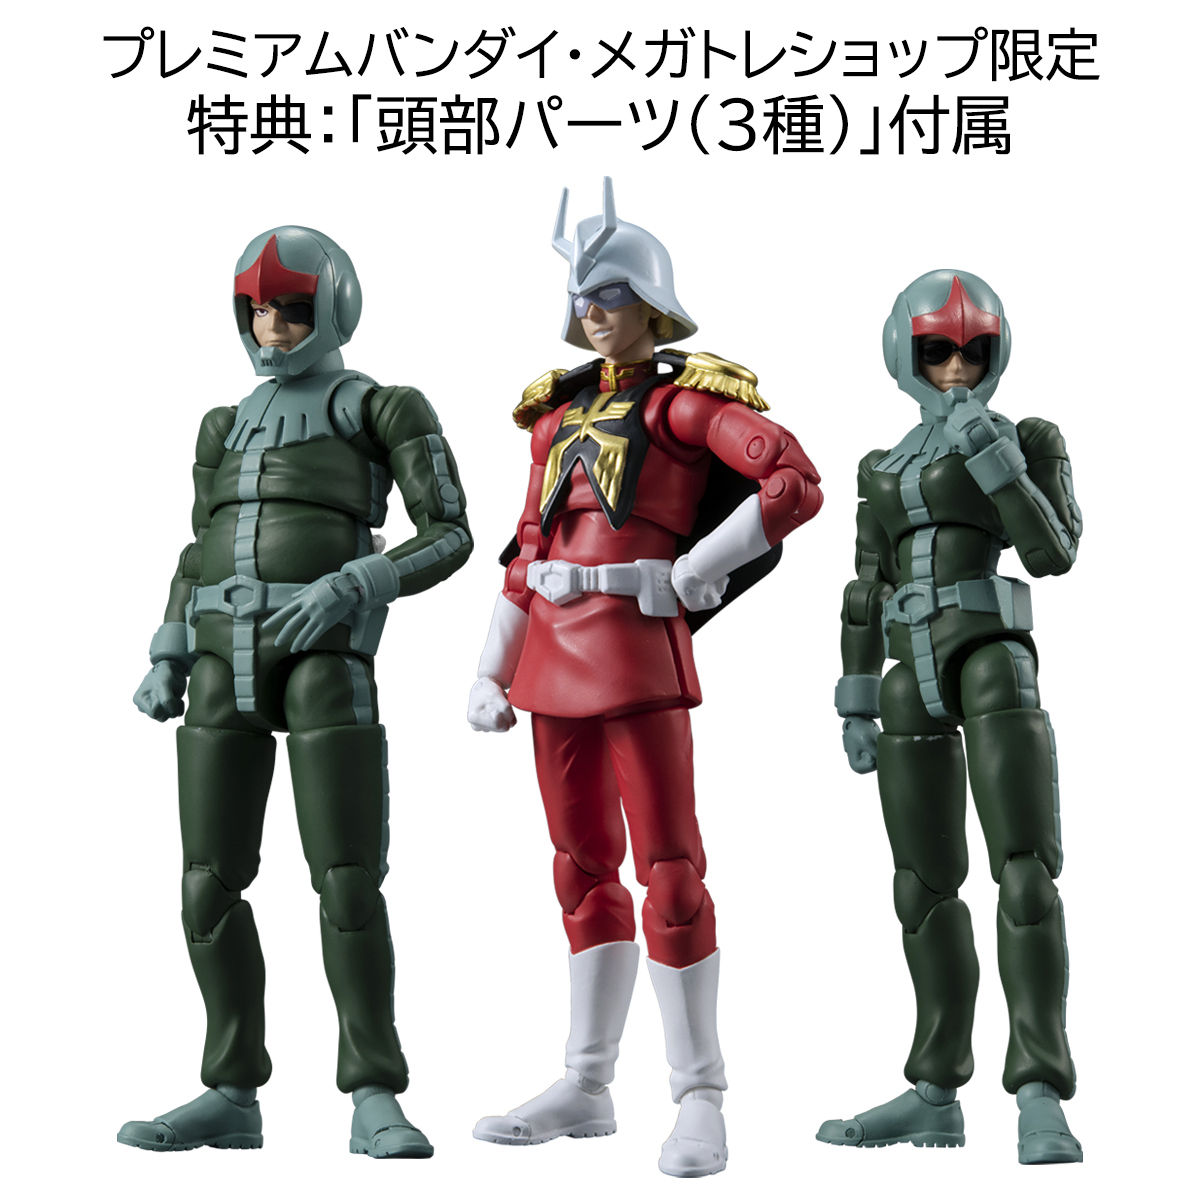 Megahobby Gundam Military Generation 1/18 Zeon Soldier(Normal Suit) + Char Aznable set(Mobile Suit Gundam)